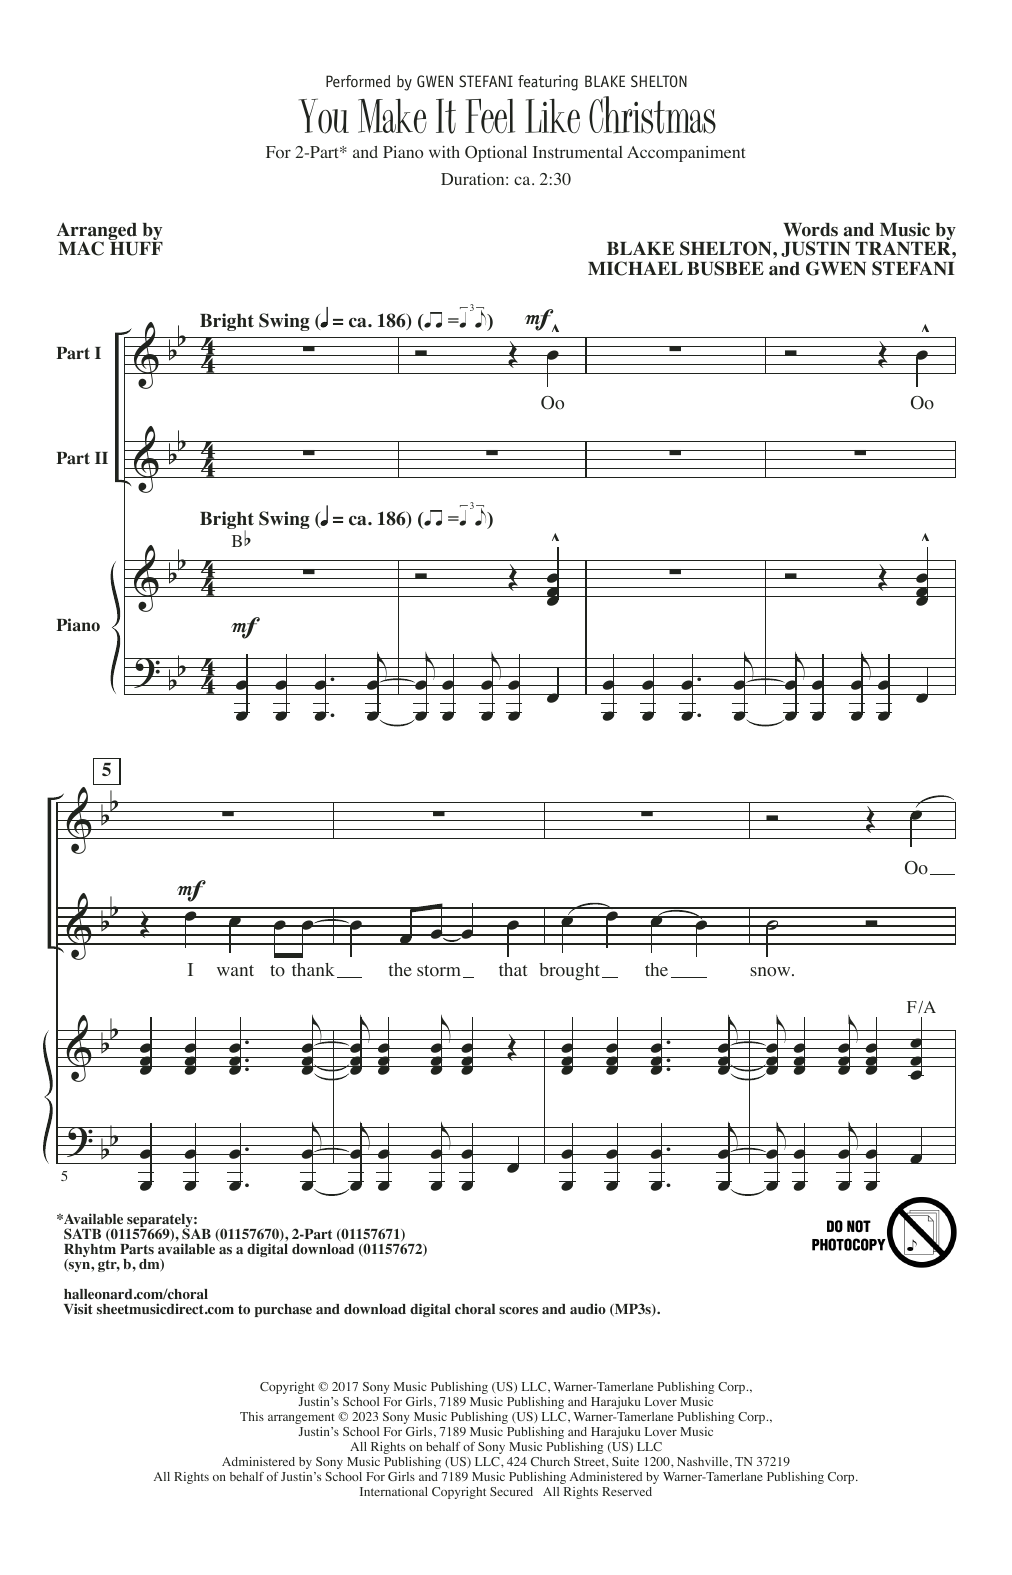 Gwen Stefani featuring Blake Shelton You Make It Feel Like Christmas (arr. Mac Huff) Sheet Music Notes & Chords for SATB Choir - Download or Print PDF